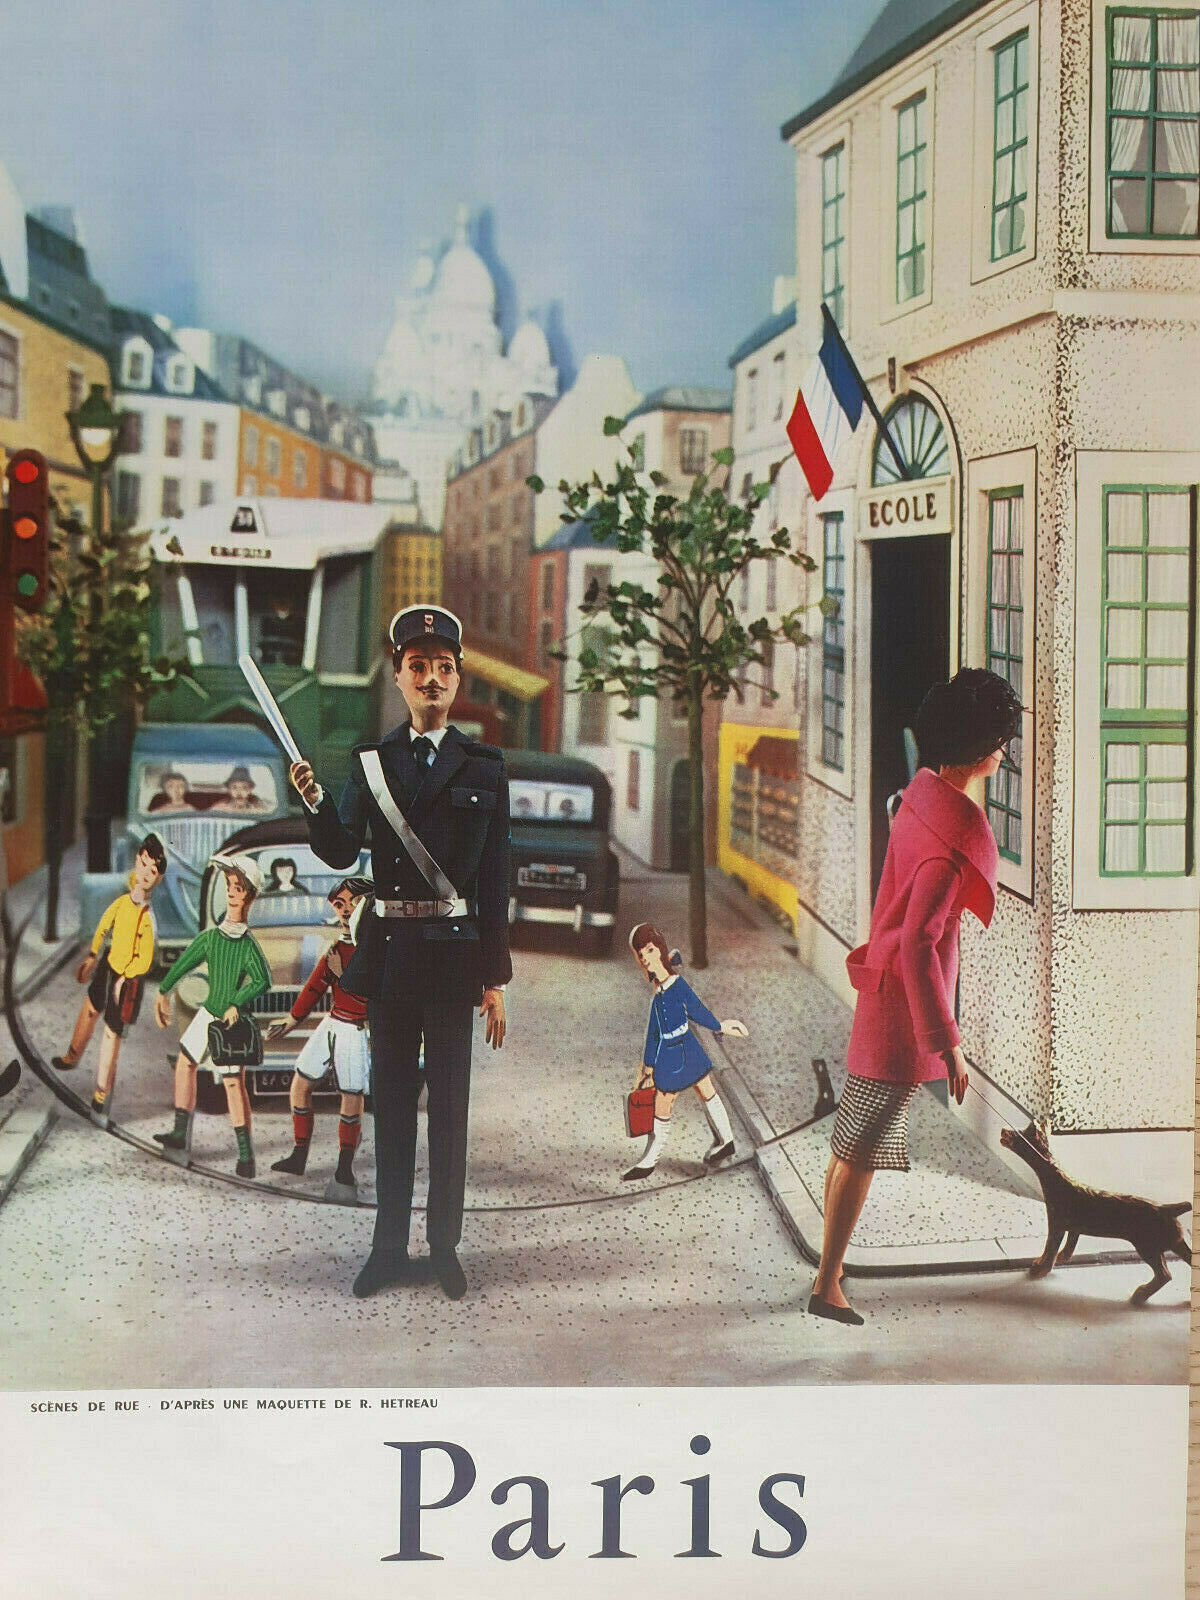 PARIS - STREET VIEW - R.HETREAU - ORIGINAL POSTER - POSTER - 1960